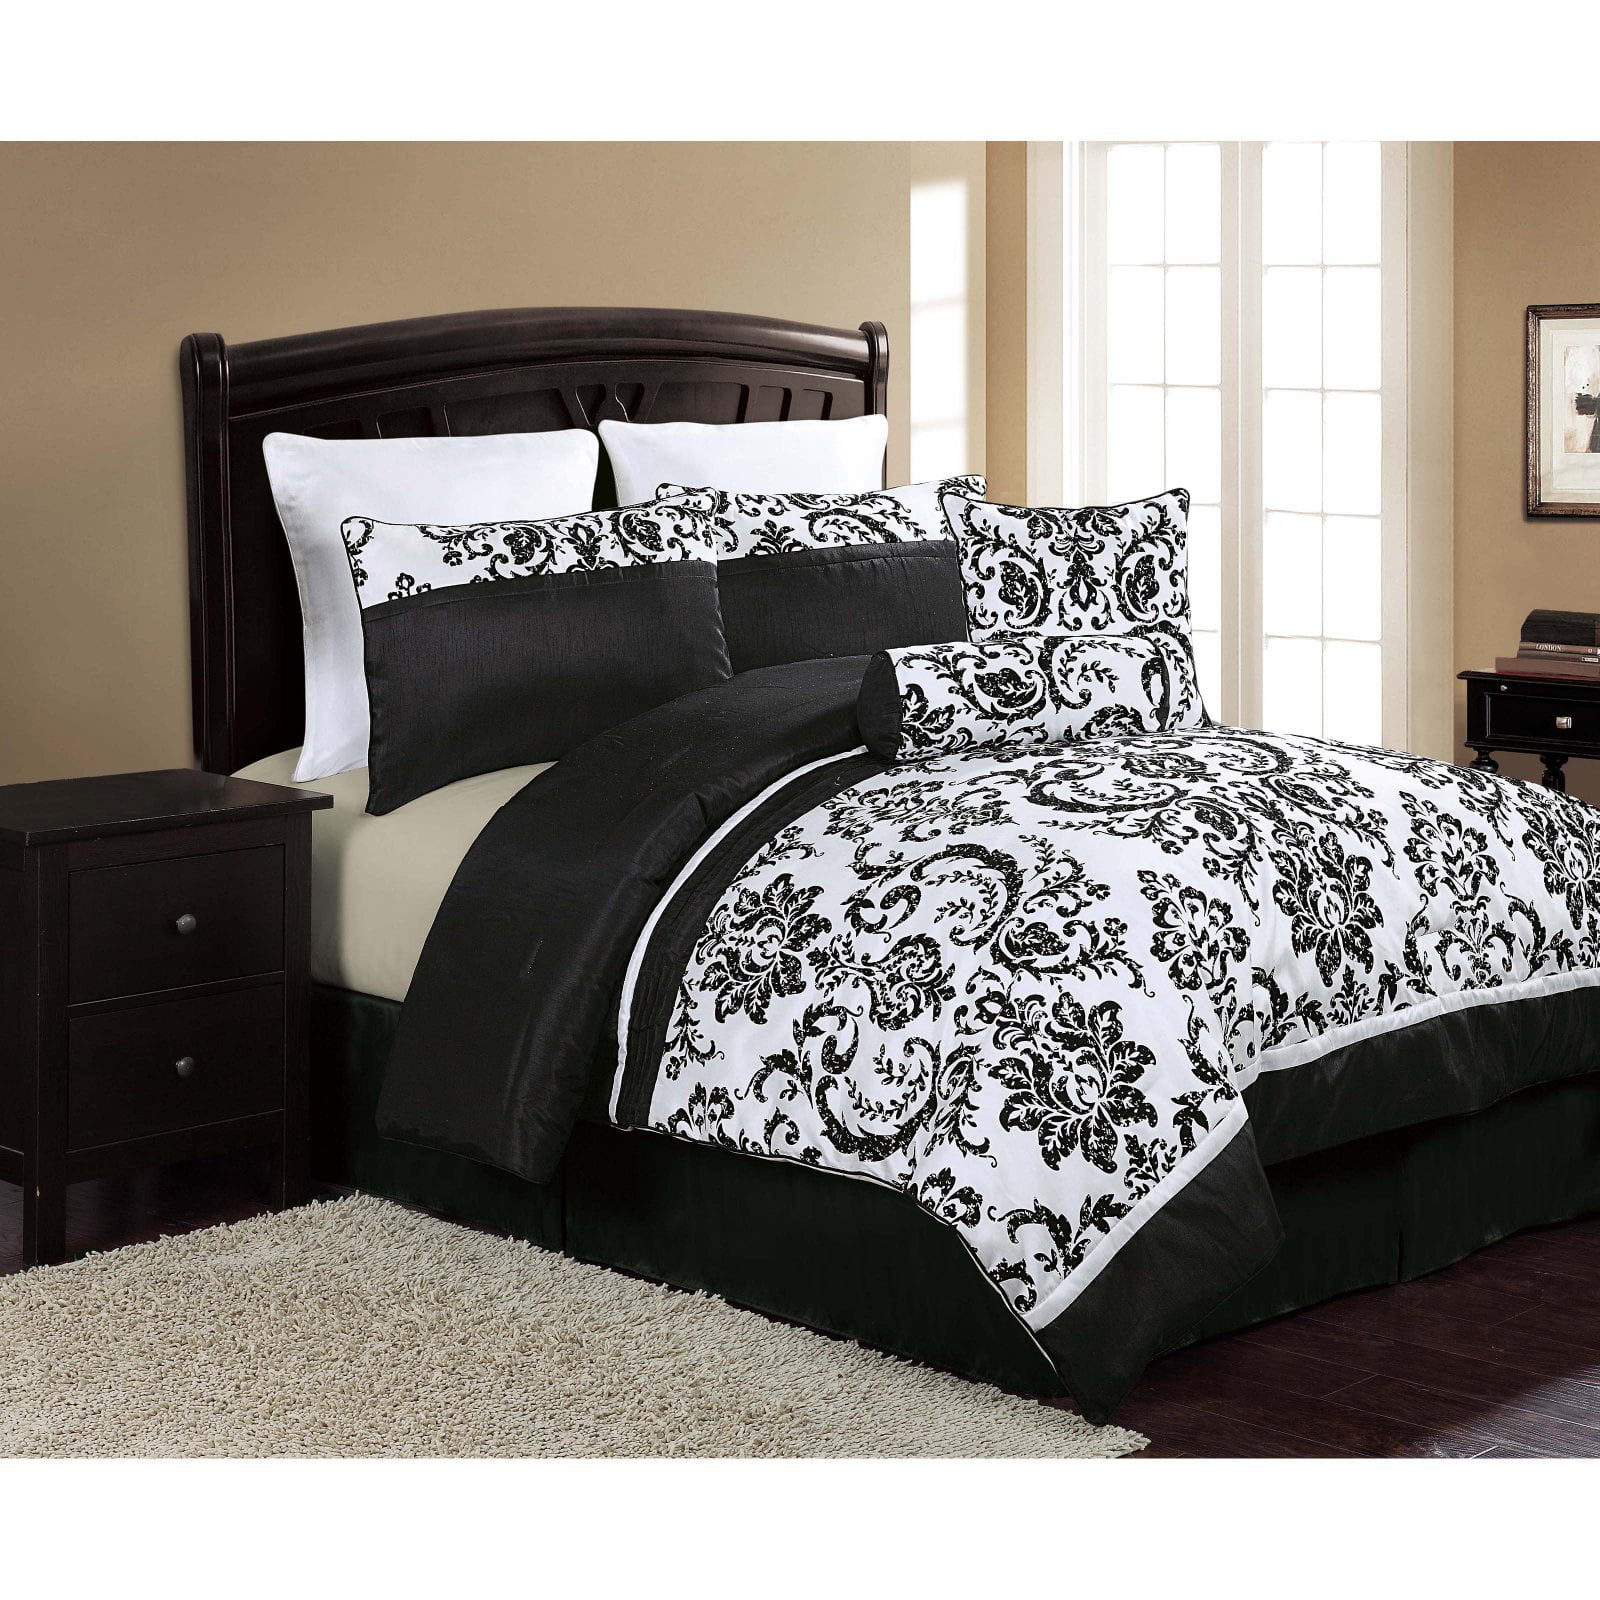 Vcny Home Daniella Flocked Comforter Set Queen Black White Walmart Com Walmart Com